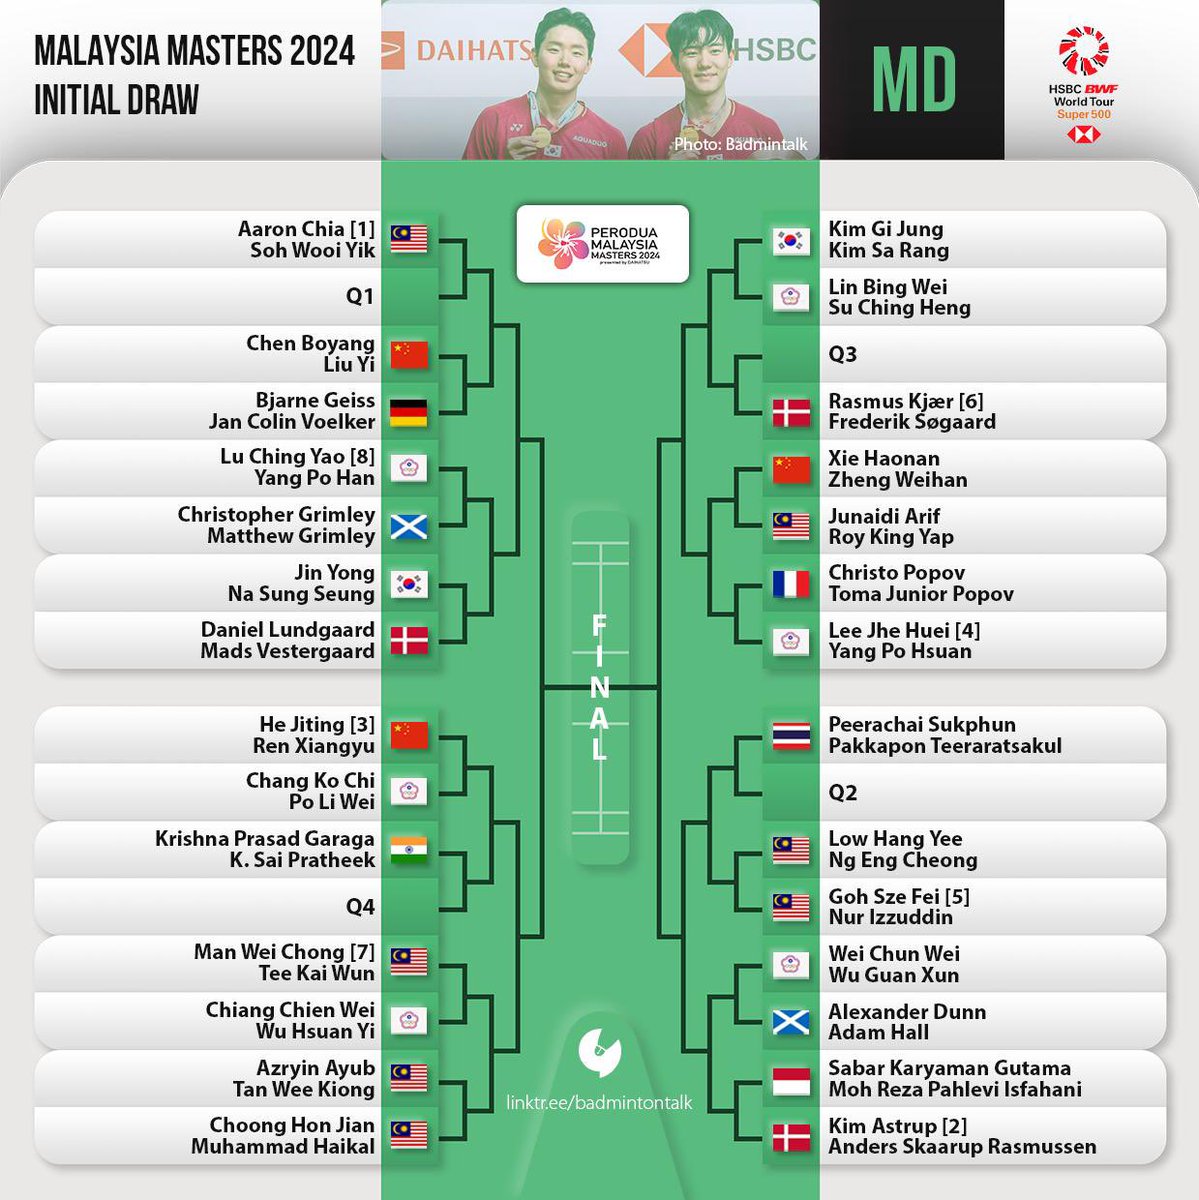 Men's Doubles Draw - #MalaysiaMasters2024 Bottom half: Sabar Karyaman Gutama/Moh. Reza Pahlevi Isfahani vs Kim Astrup/Anders Skaarup Rasmussen